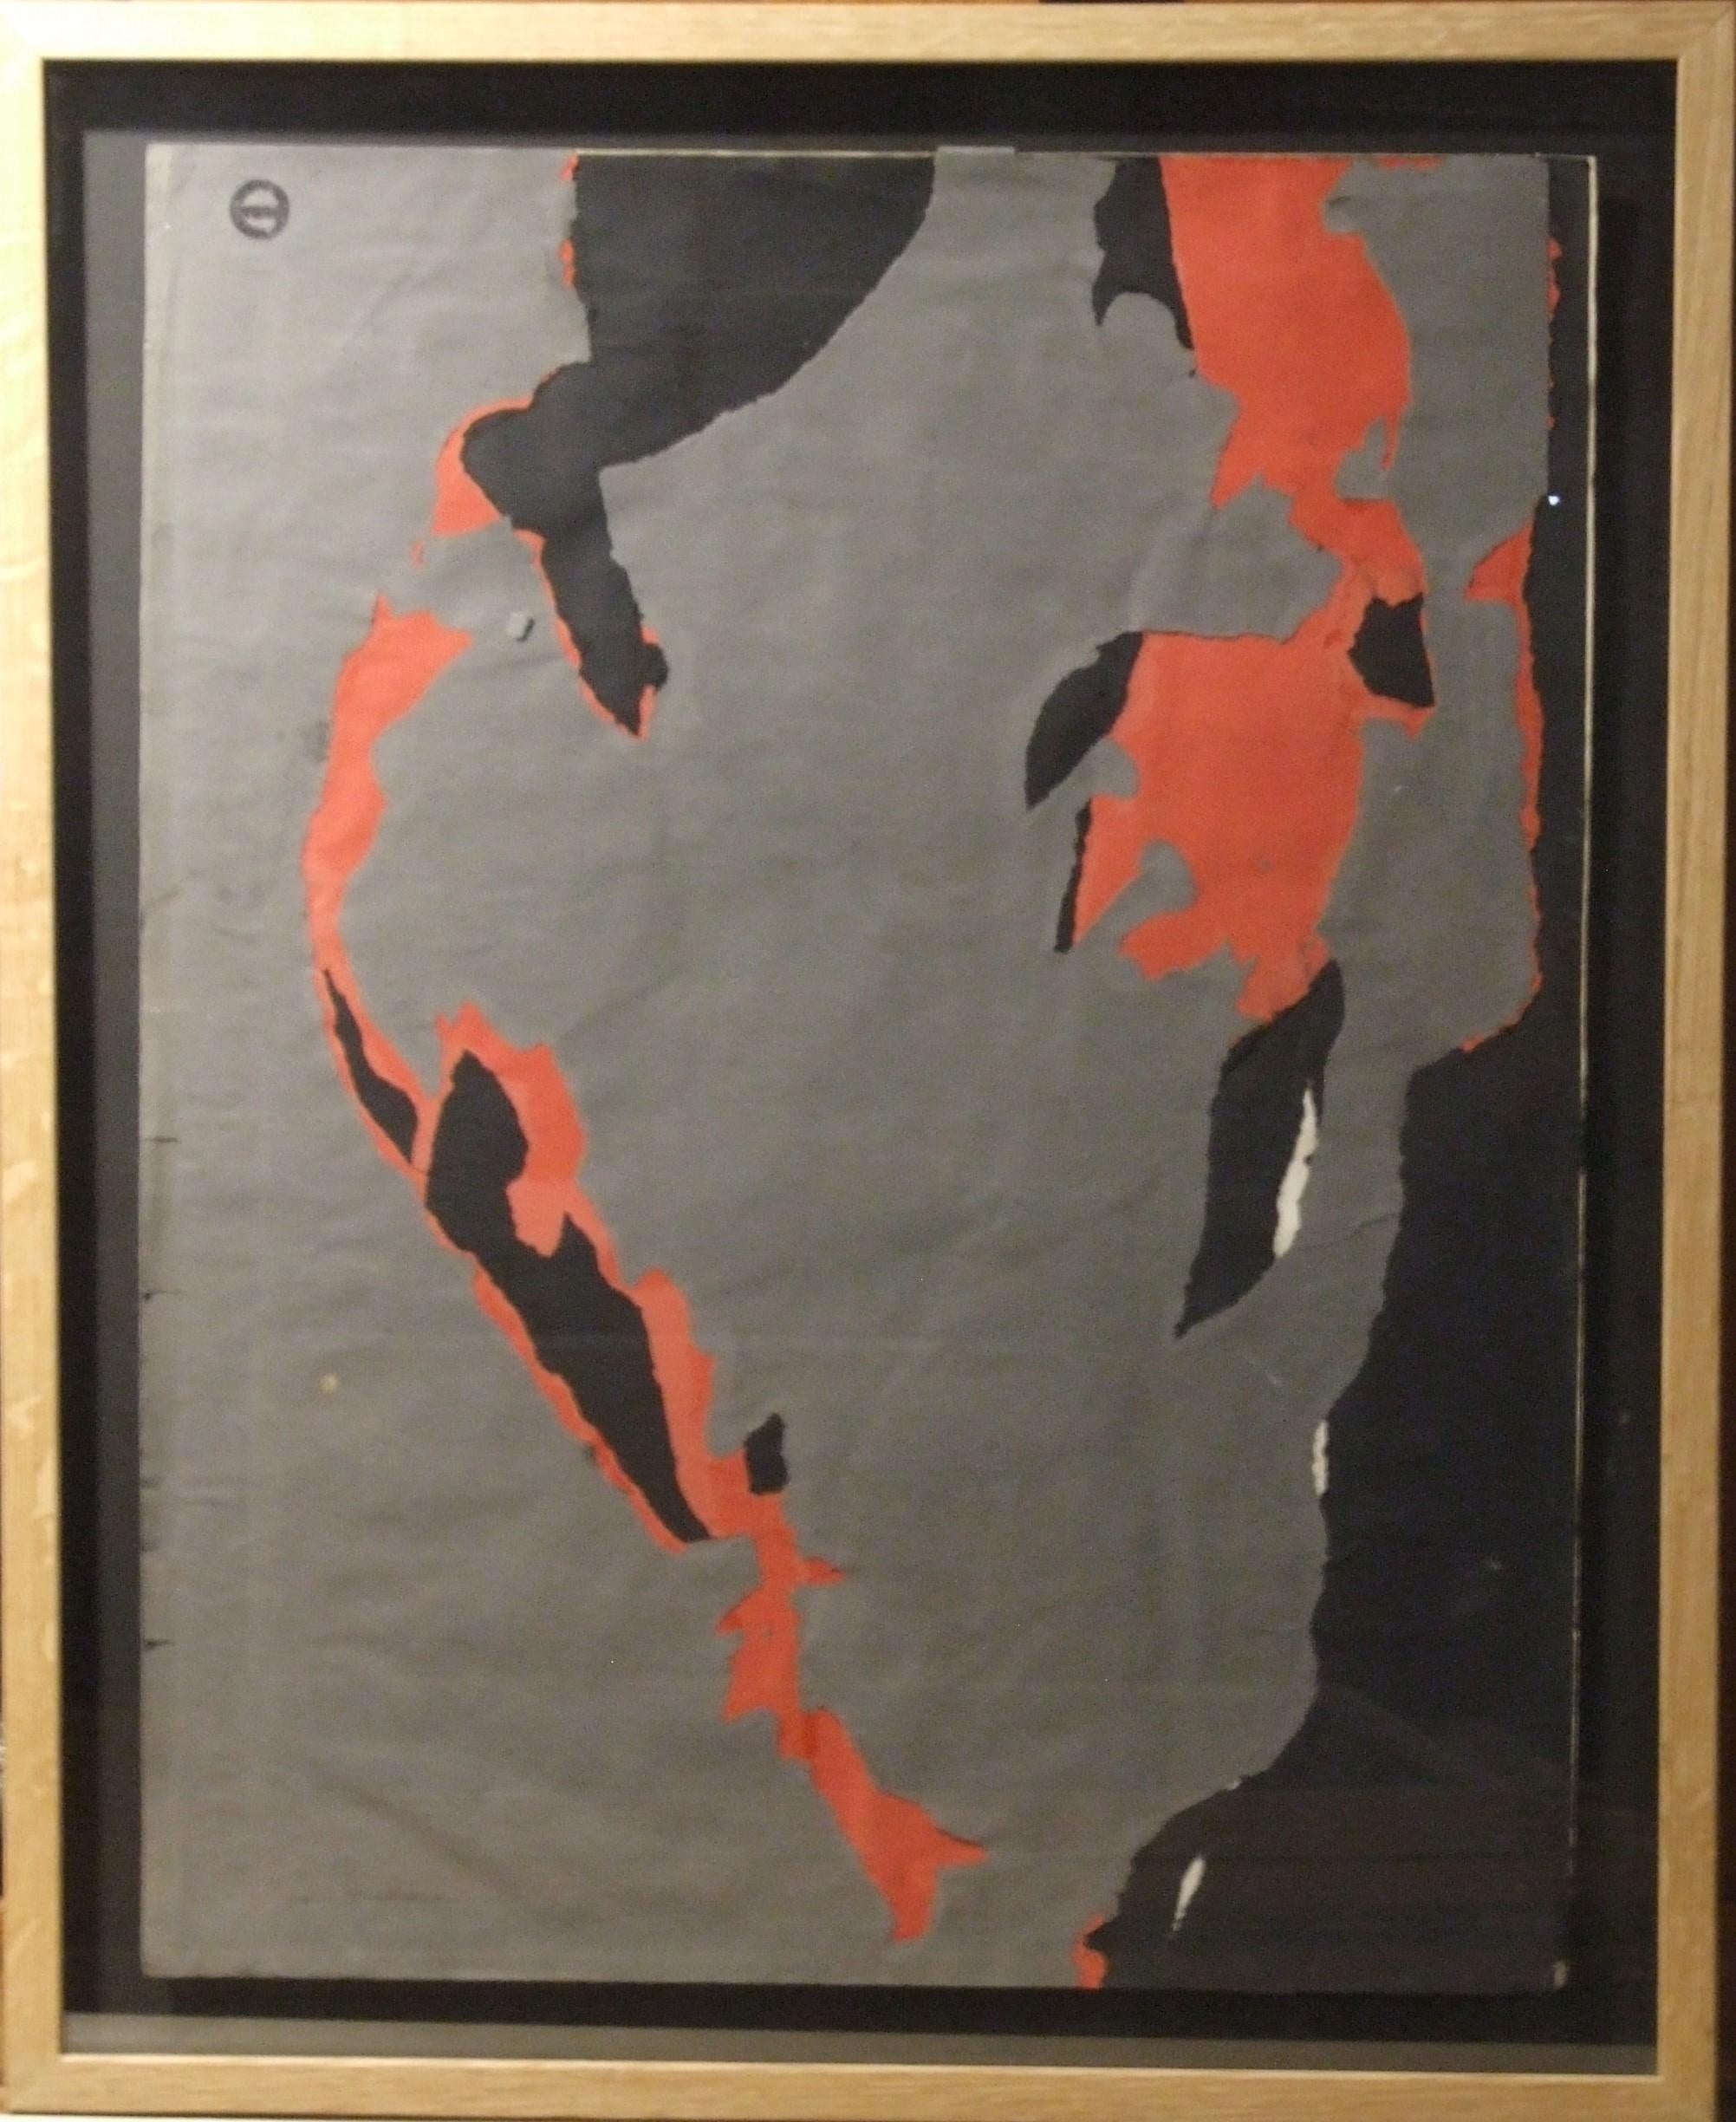 Abstrakte Rouge- et-Noir-Gouache auf Papier, 64x50 cm, gerahmt – Mixed Media Art von Albert Chubac